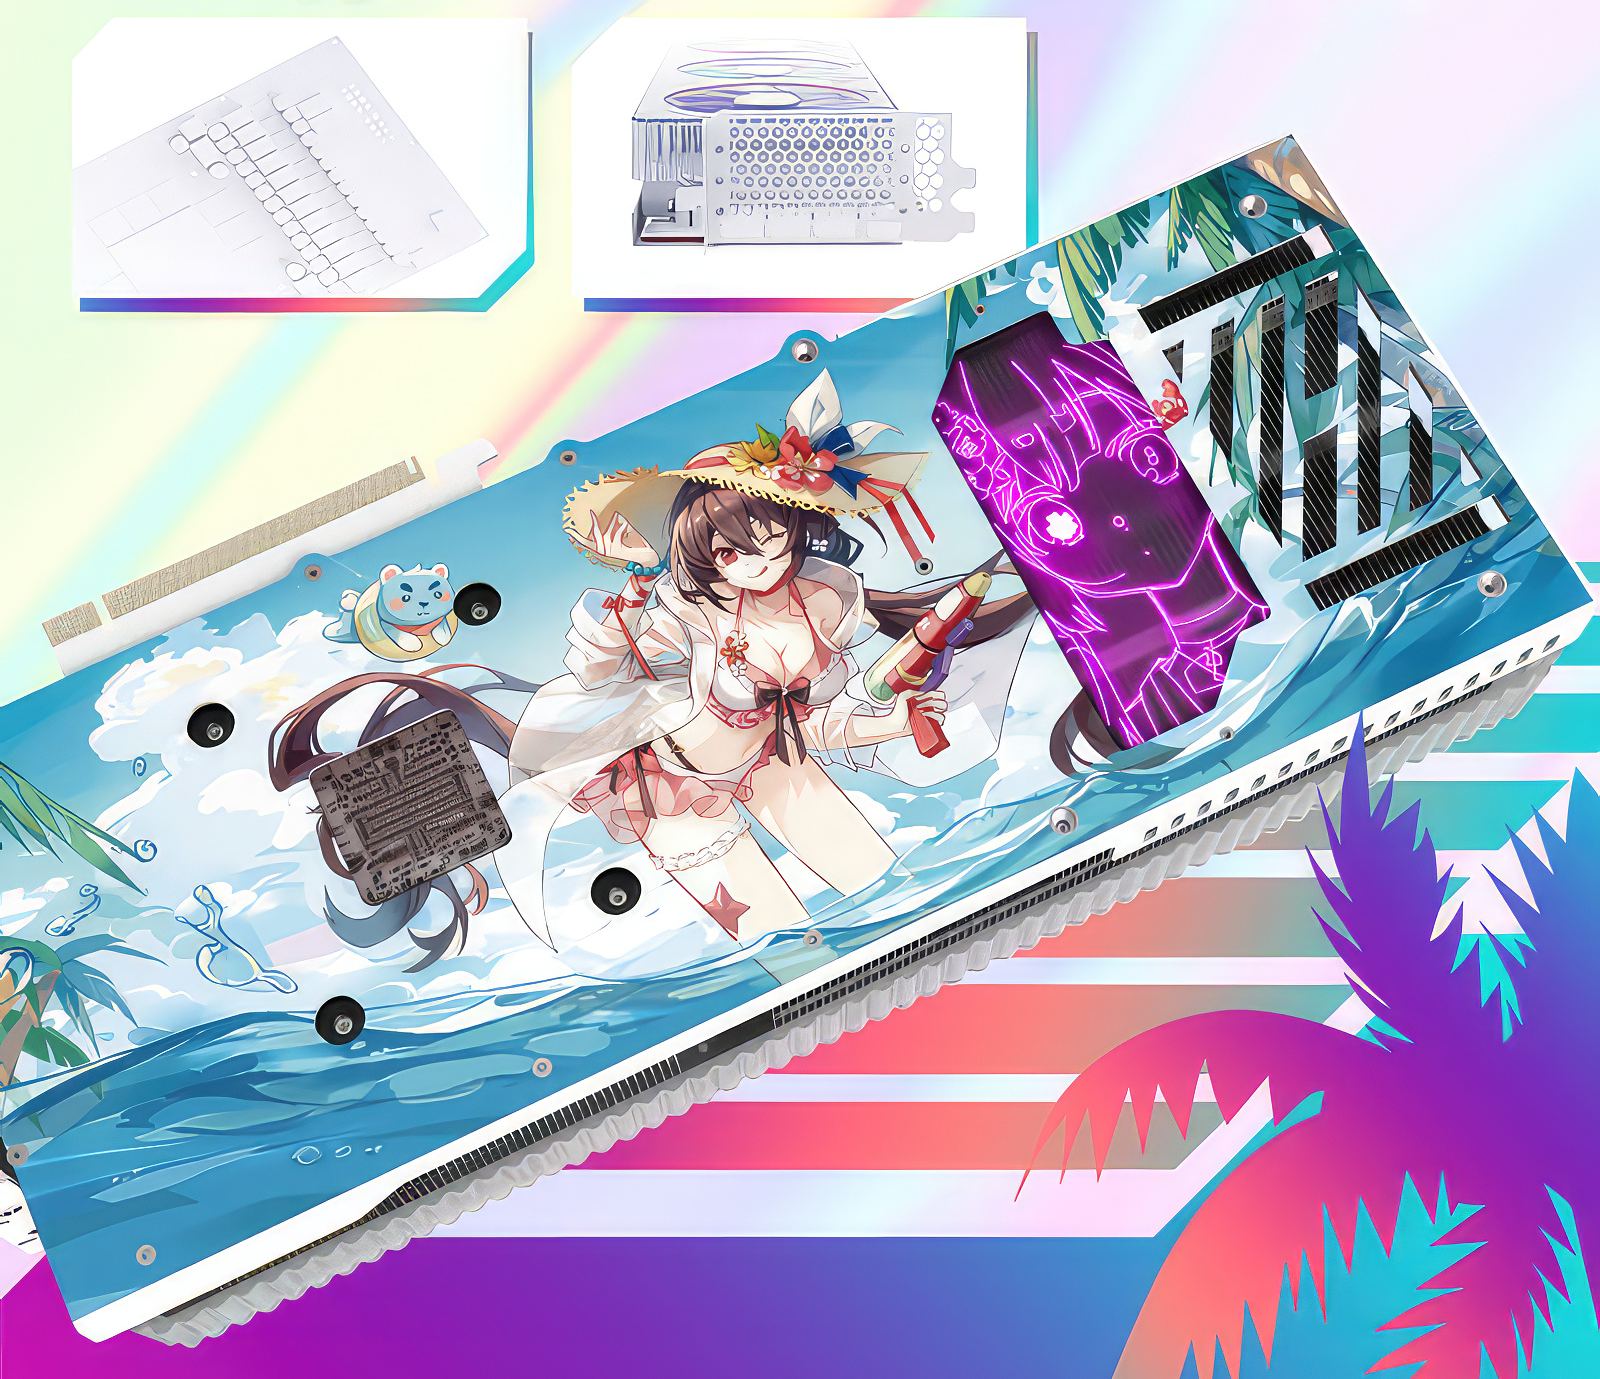 Argb Graphics Card Bracketcustomized Rtx3080ti 3090 4090 Anime Gpu  Holderpc Gaming Cabinet Decorative Vga Support Aura Sync  Fluid Diy  Cooling  Accessories  AliExpress